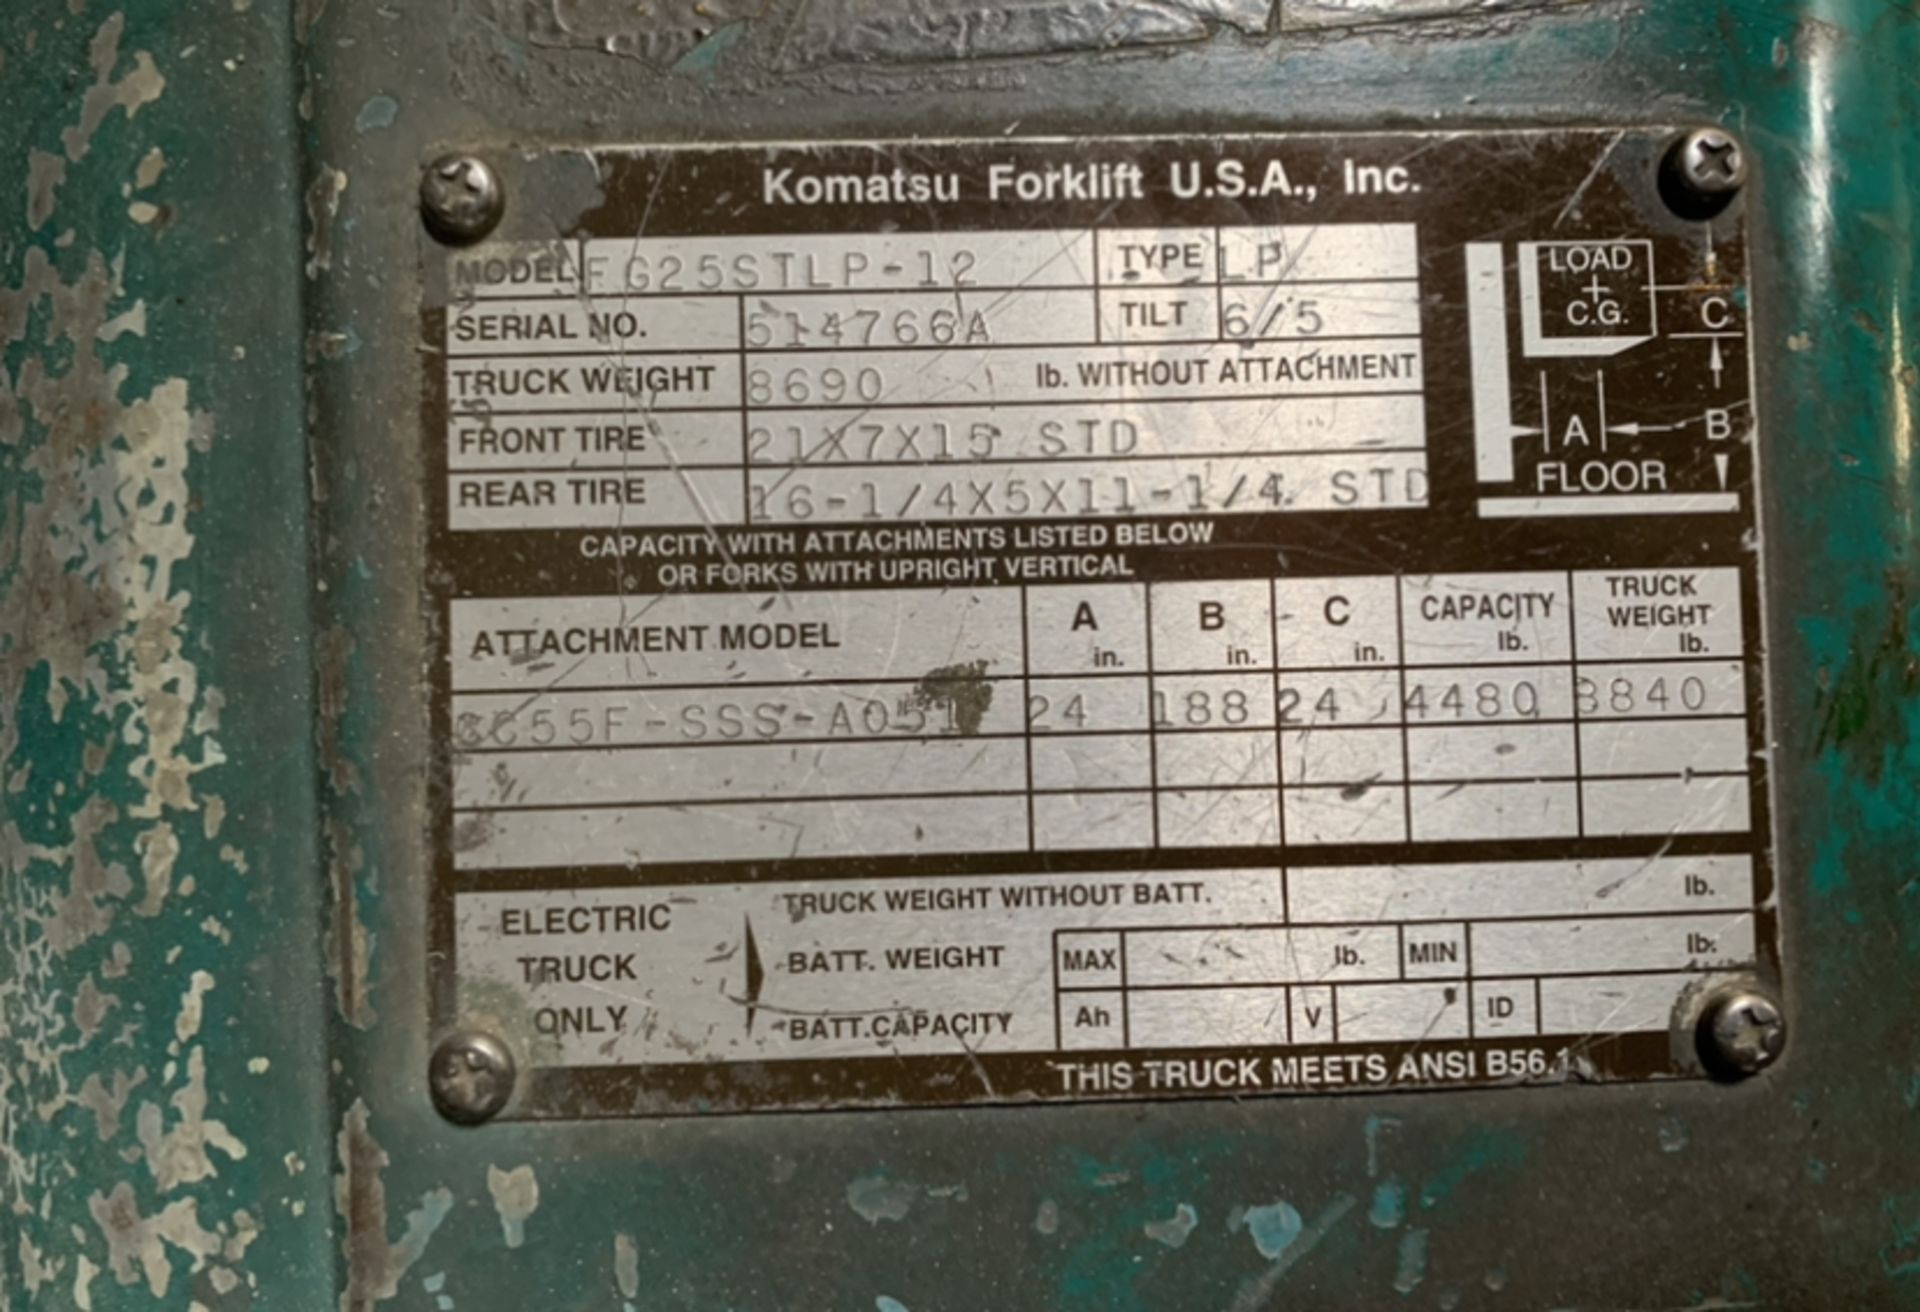 Komatsu FG25STLP-12 Forklift, Cap: 4,480 LB, Lft Ht, 188”, Pneumatic Tires, LP Gas - Image 7 of 8